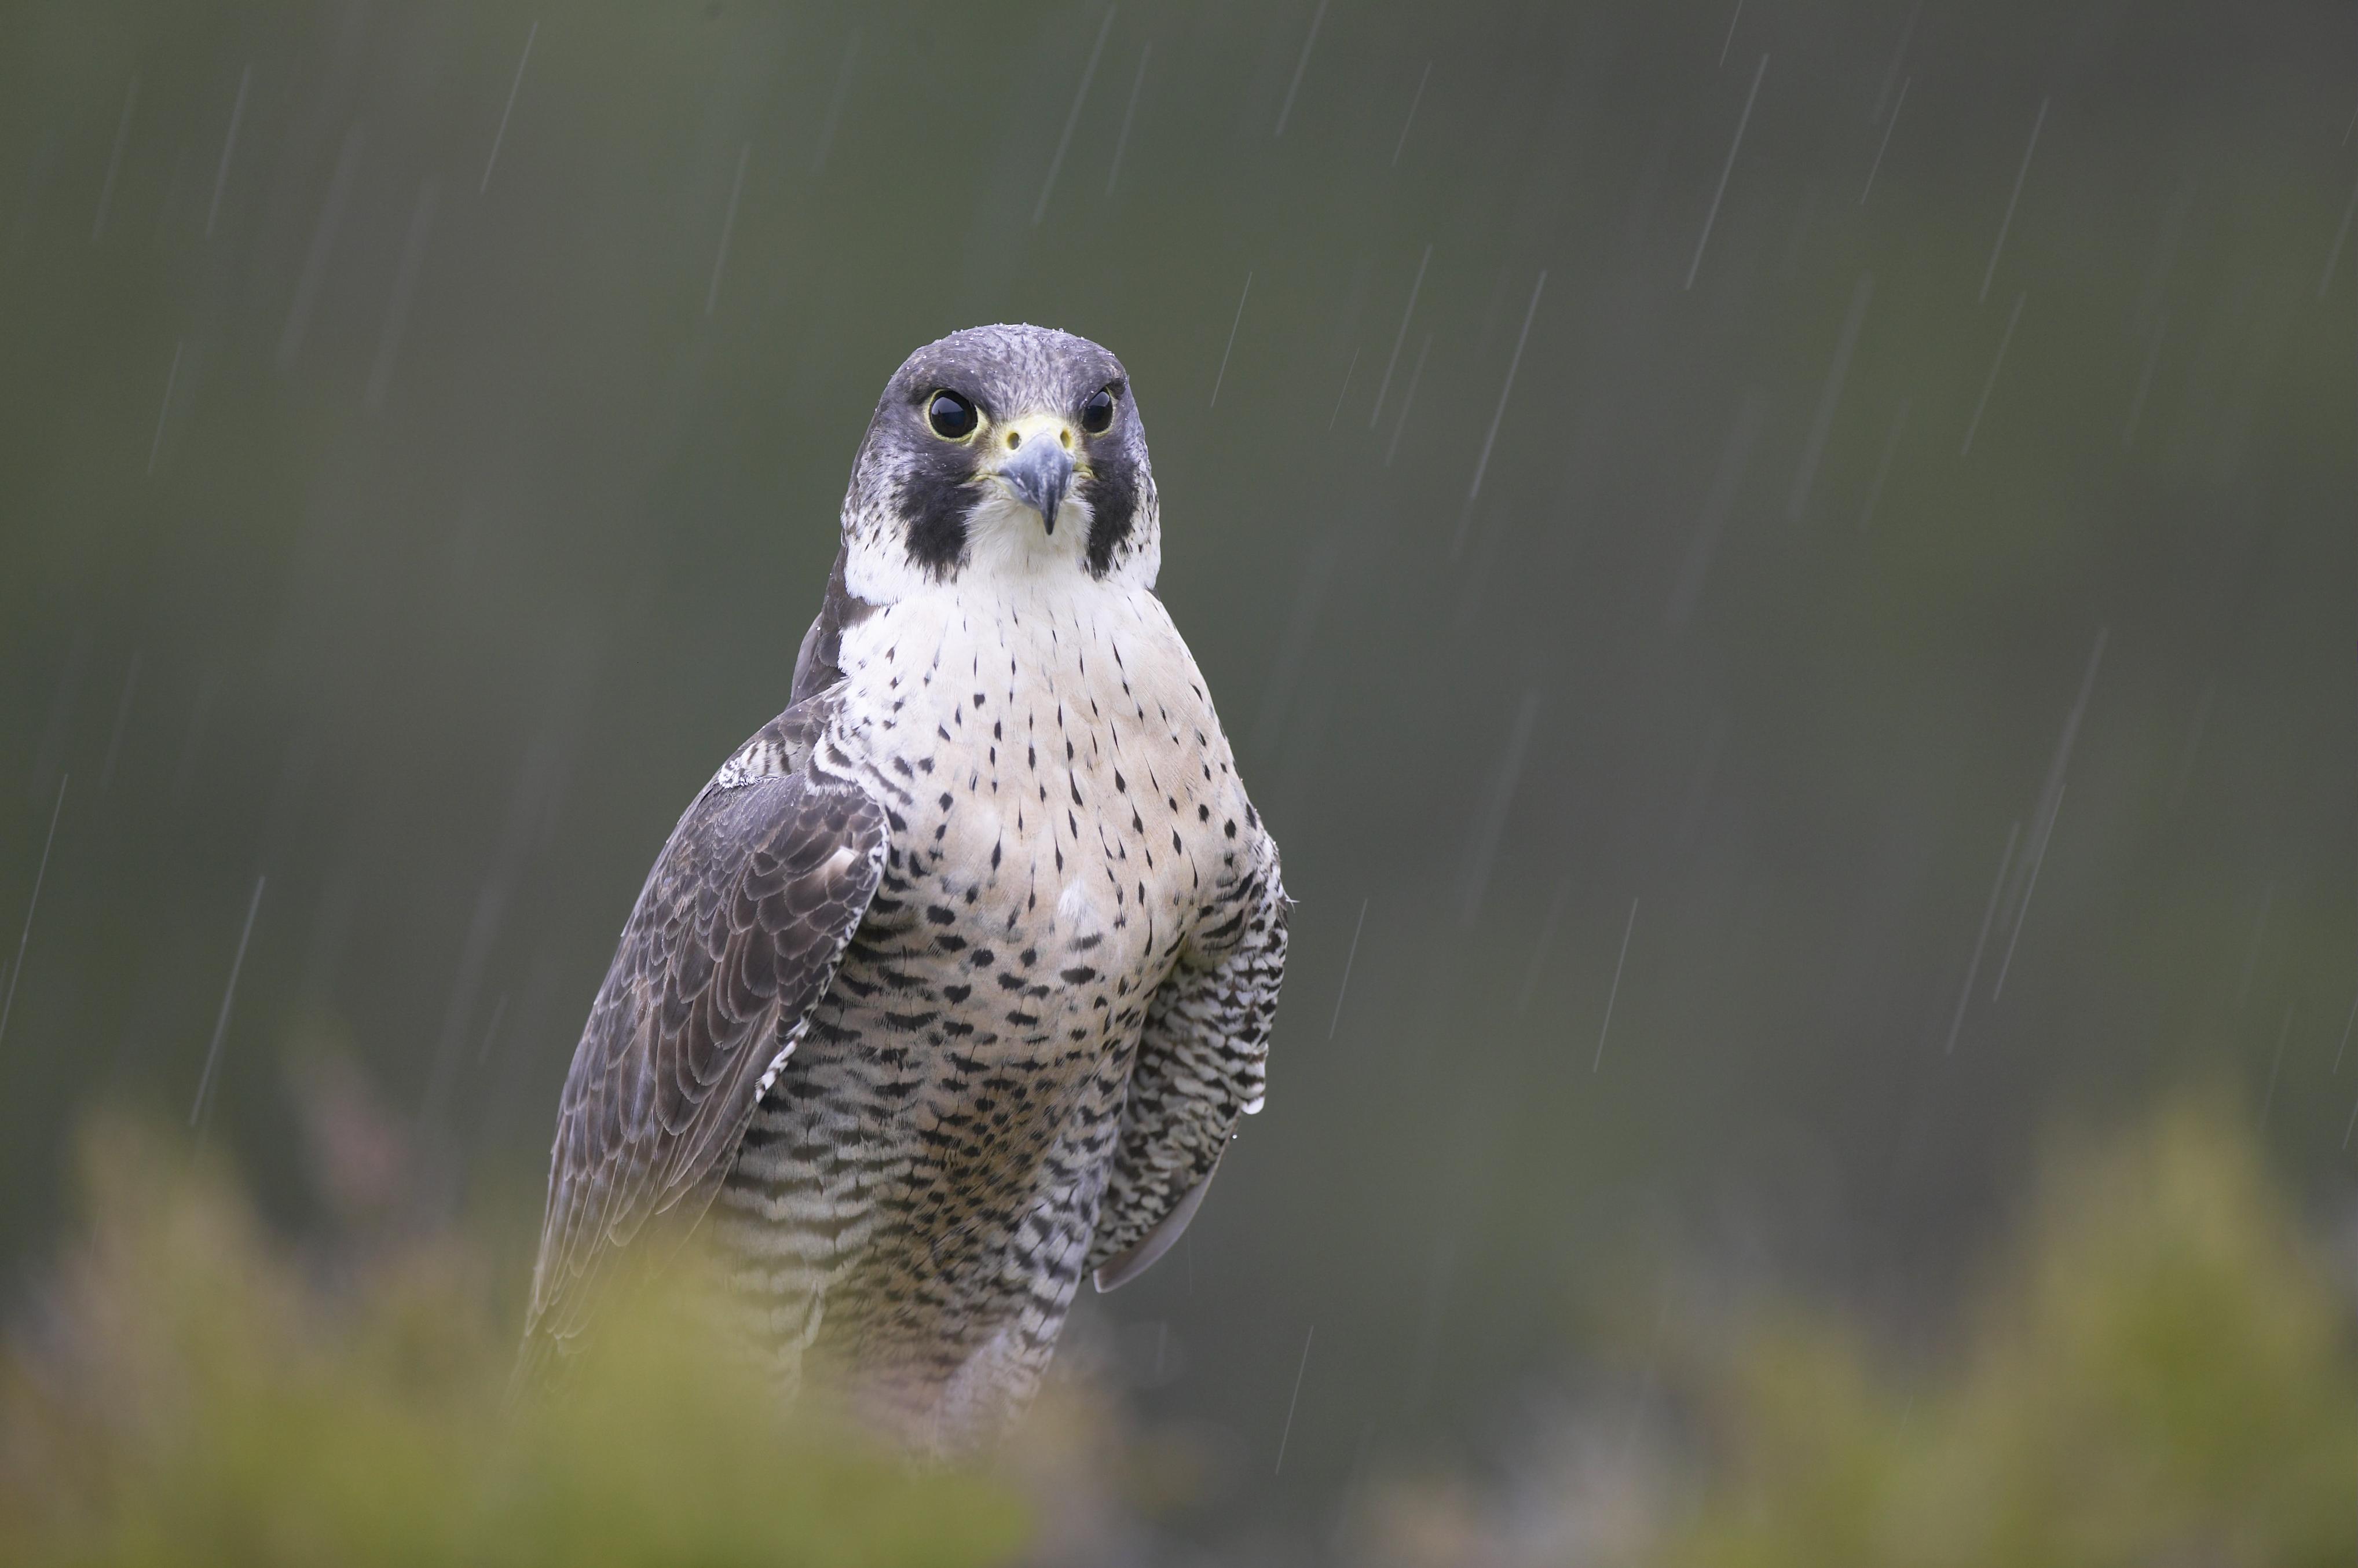 Wild Scotland wildlife and adventure tourism | Birds | Birds of Prey ...